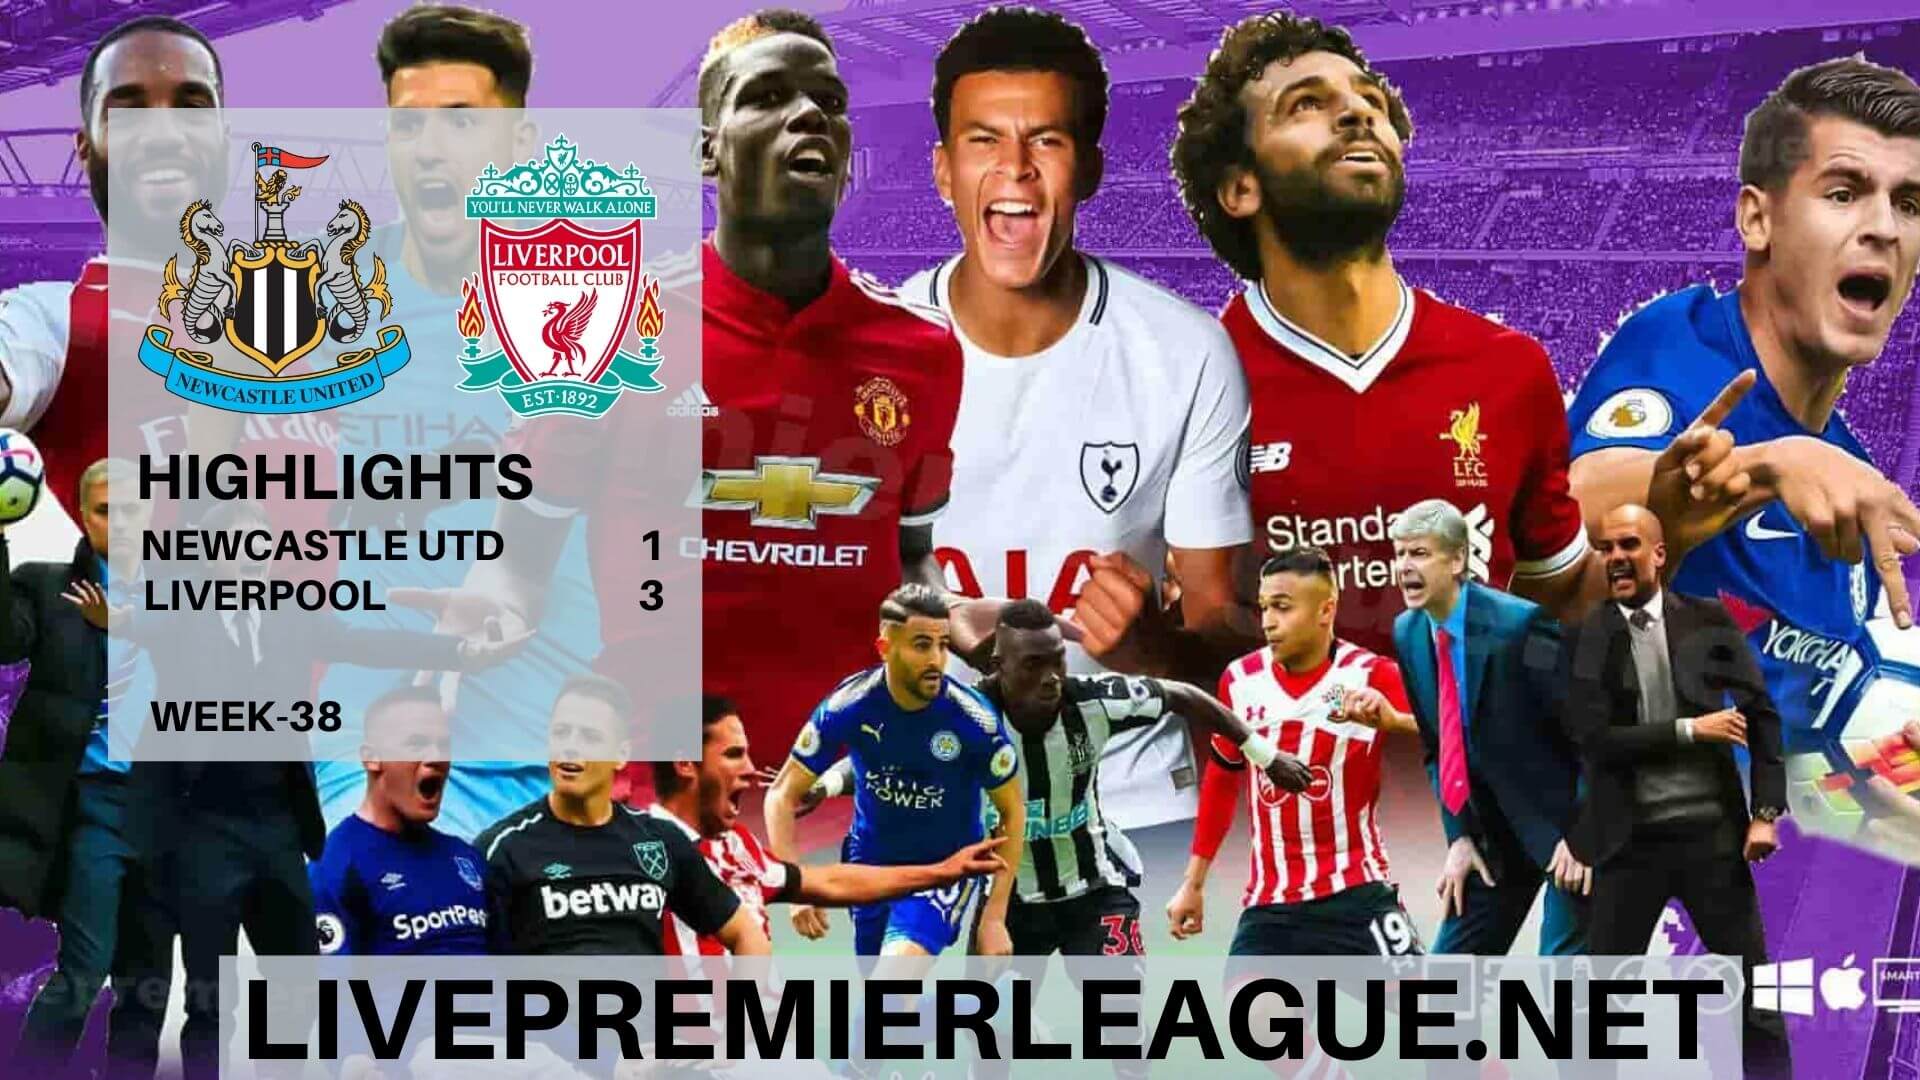 Newcastle United Vs Liverpool Highlights 2020 EPL Week 38